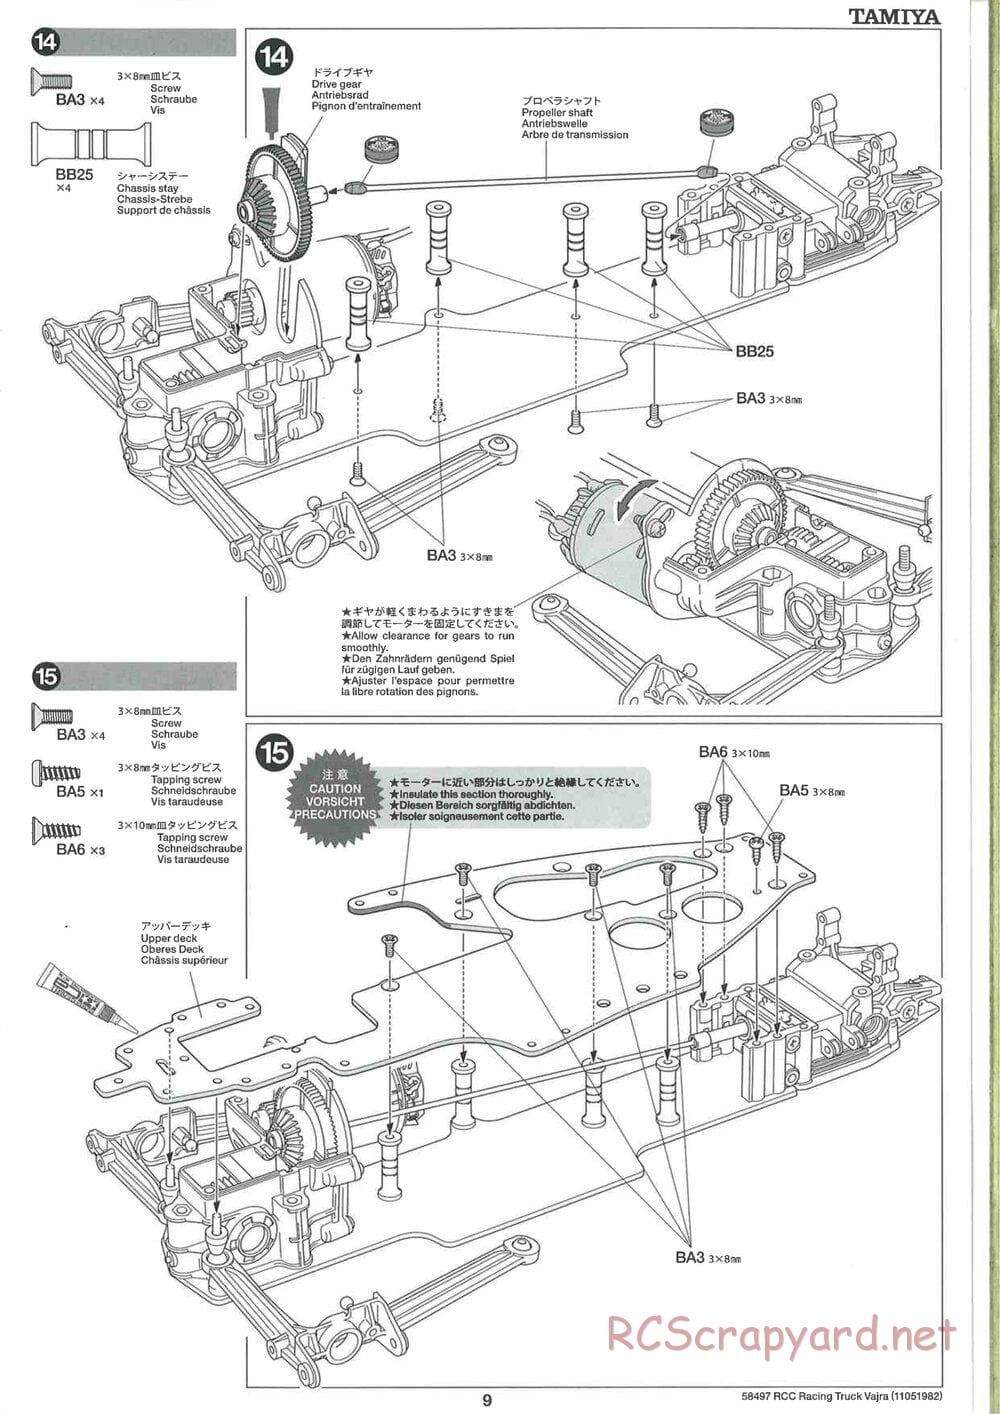 Tamiya - Vajra - AV Chassis - Manual - Page 9